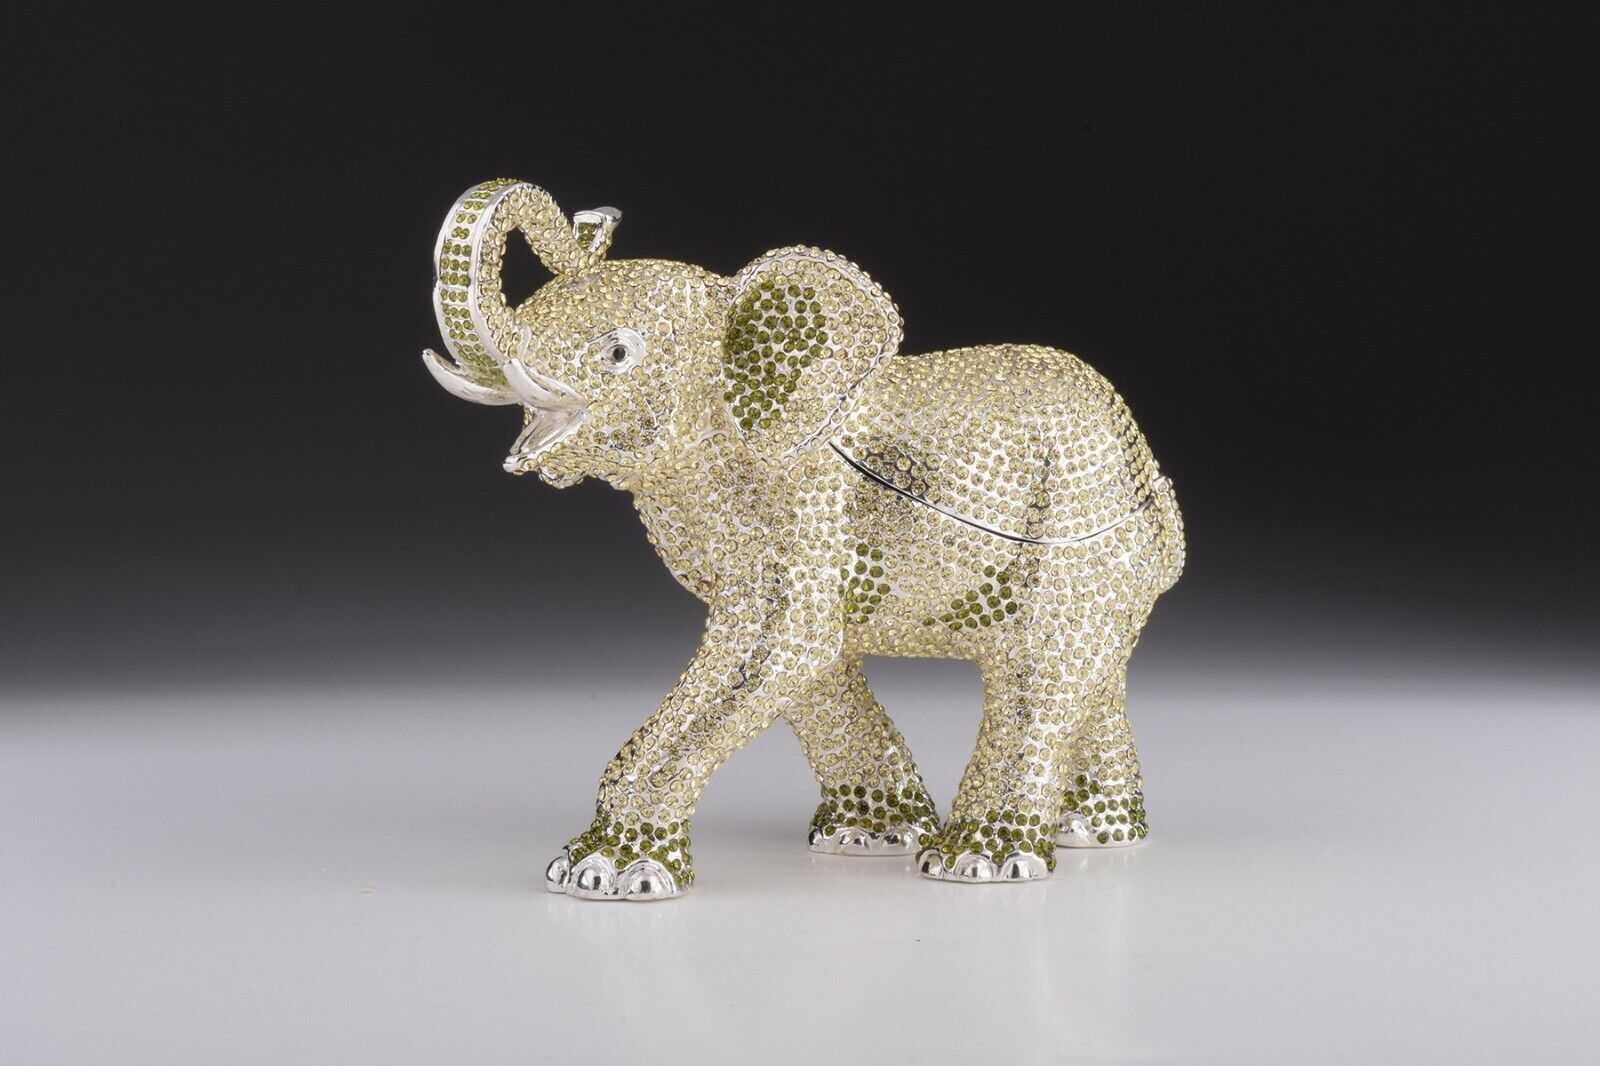 Keren Kopa Large Elephant LIMITED EDITION trinket box with Austrian crystals